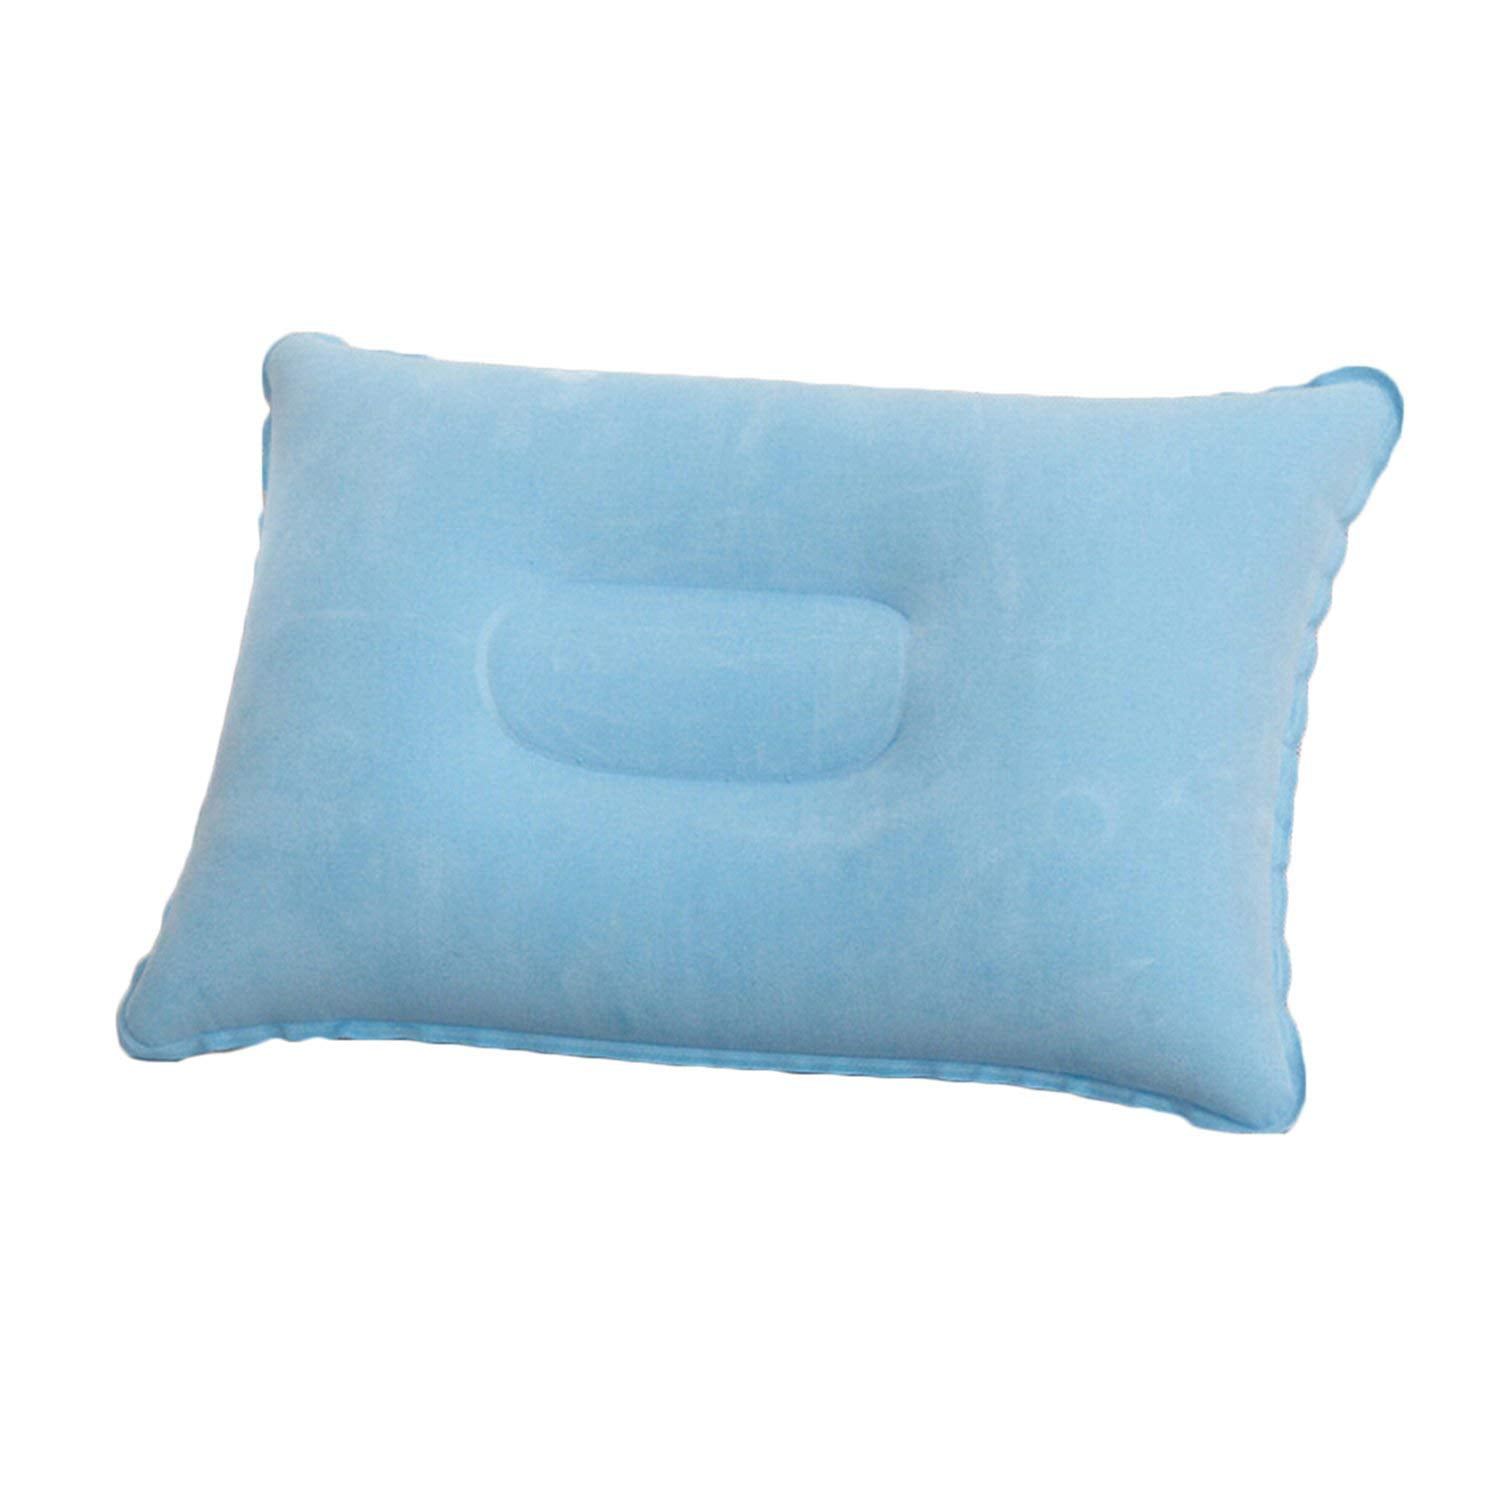 Compact Travel Air Pillow Inflatable Cushion Camping Car Head Rest Lumbar 